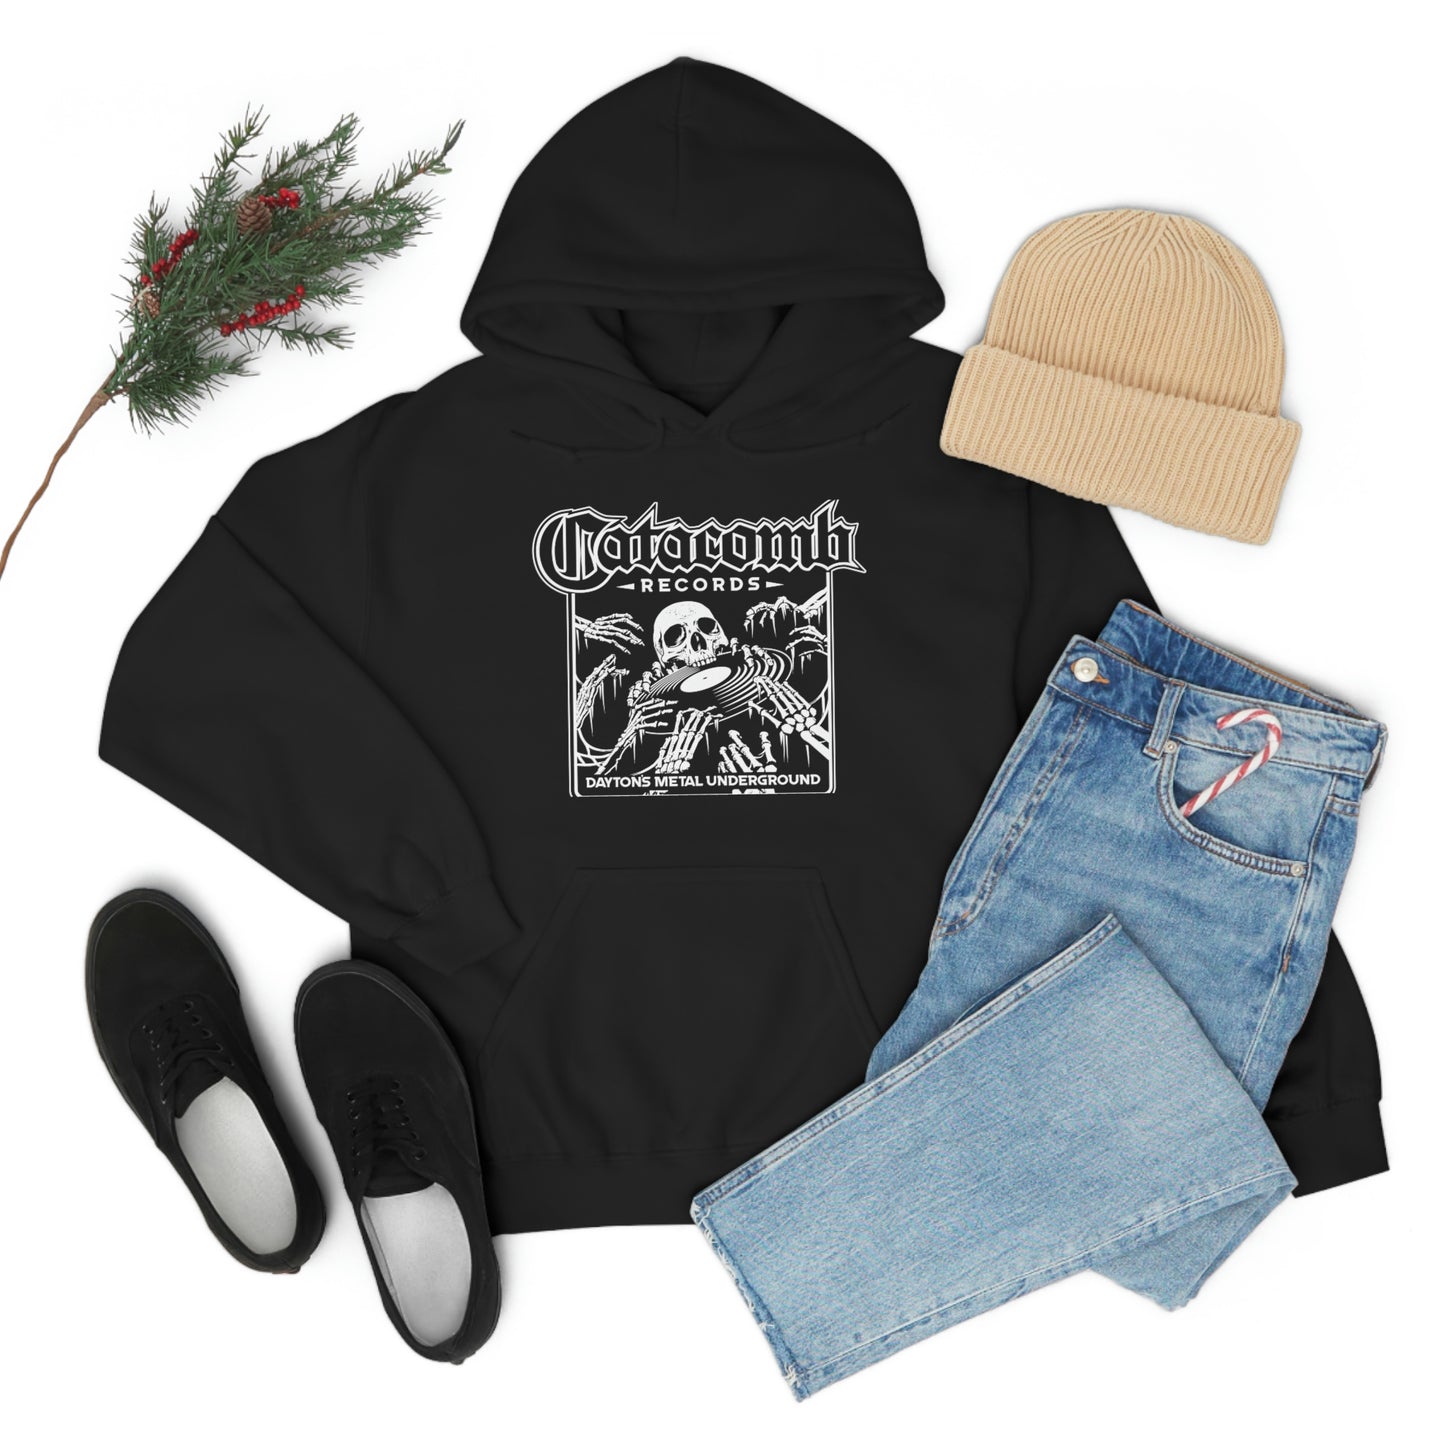 Catacomb Records Hooded Sweatshirt